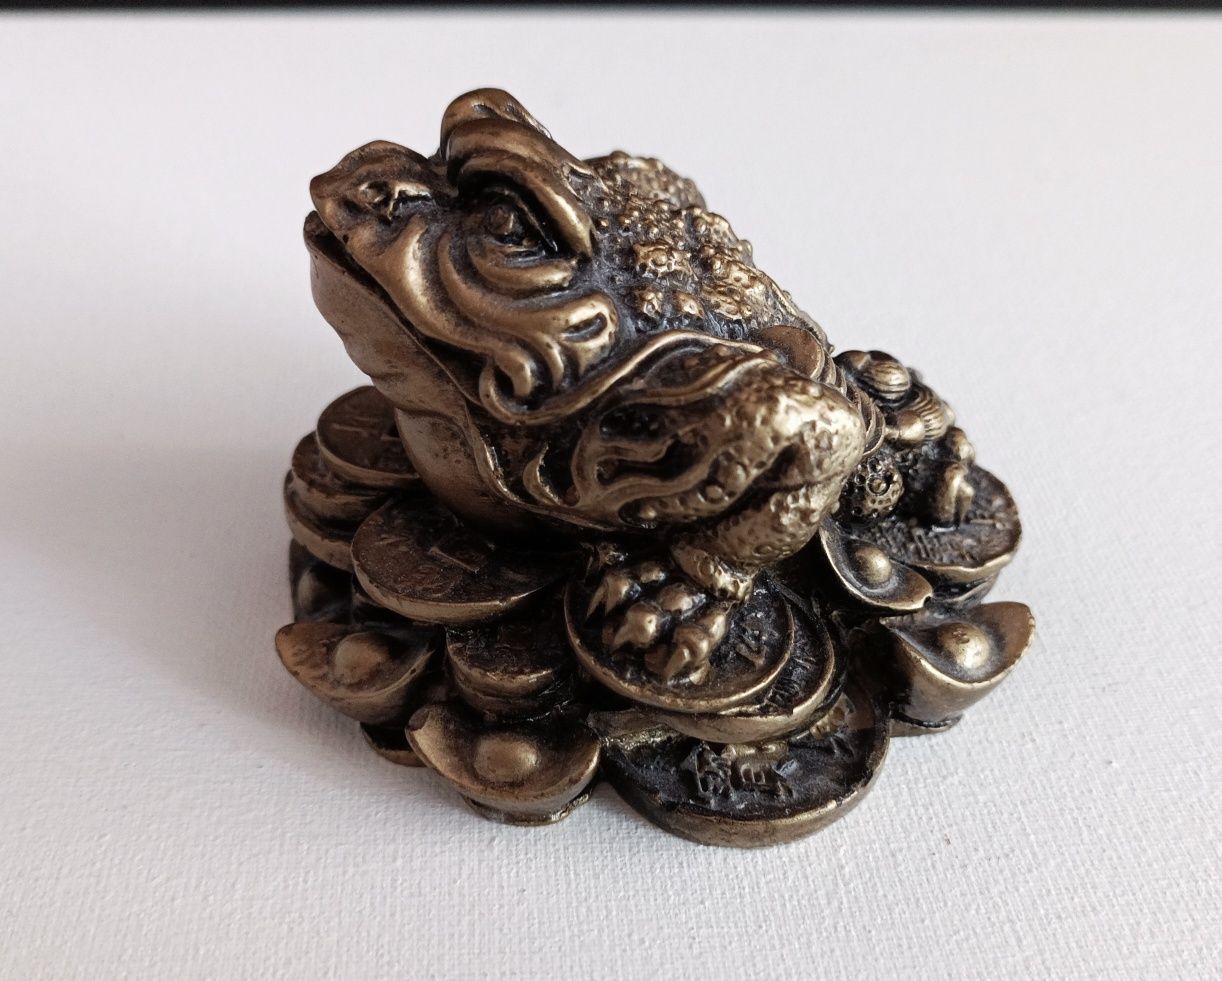 Статуэтка: денежная жаба, жаба на монетах бронзового цвета фен-шуй